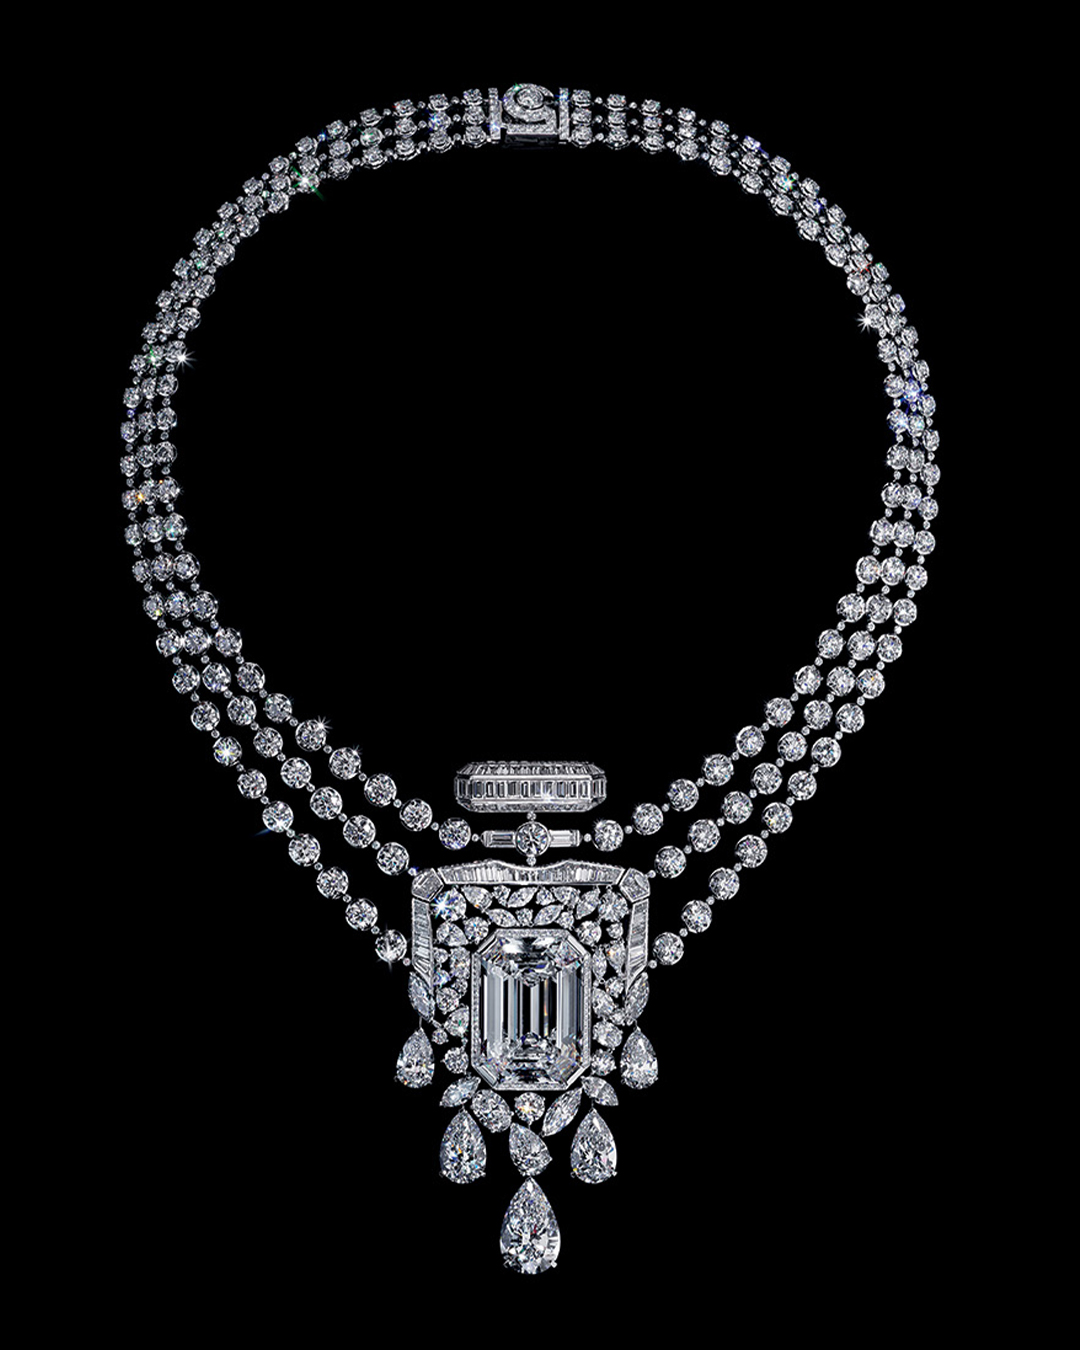 Chanel No 5 Fine Jewelry Charming Luxury